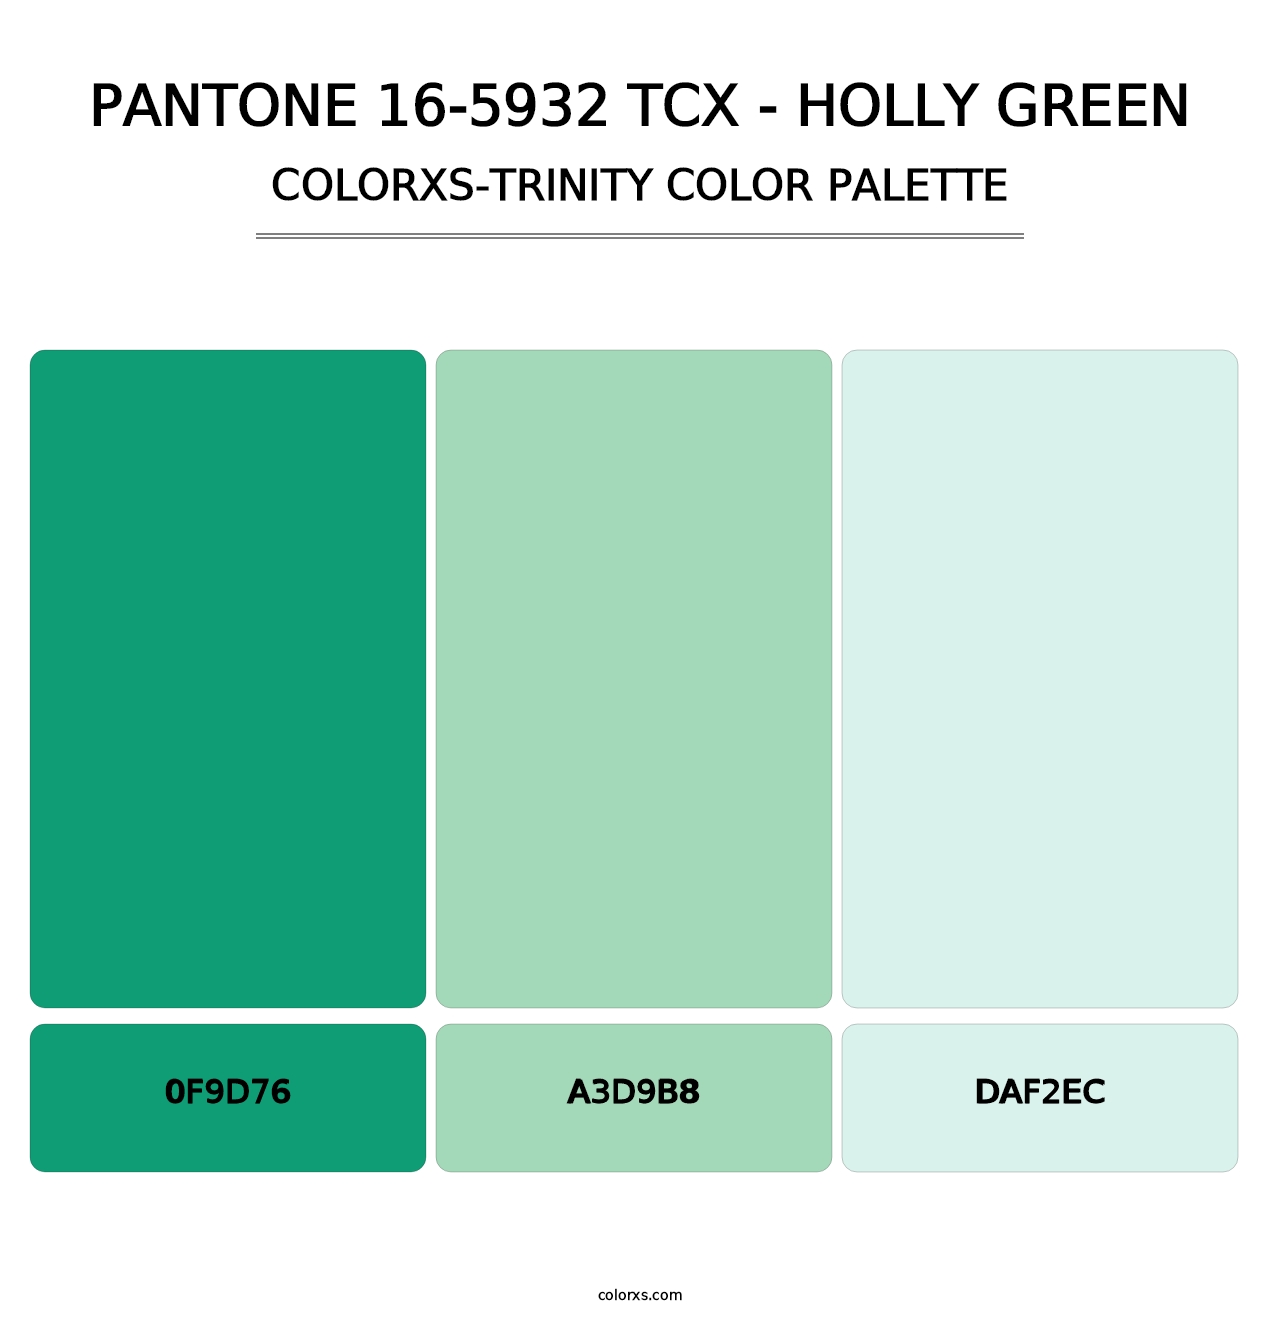 PANTONE 16-5932 TCX - Holly Green - Colorxs Trinity Palette